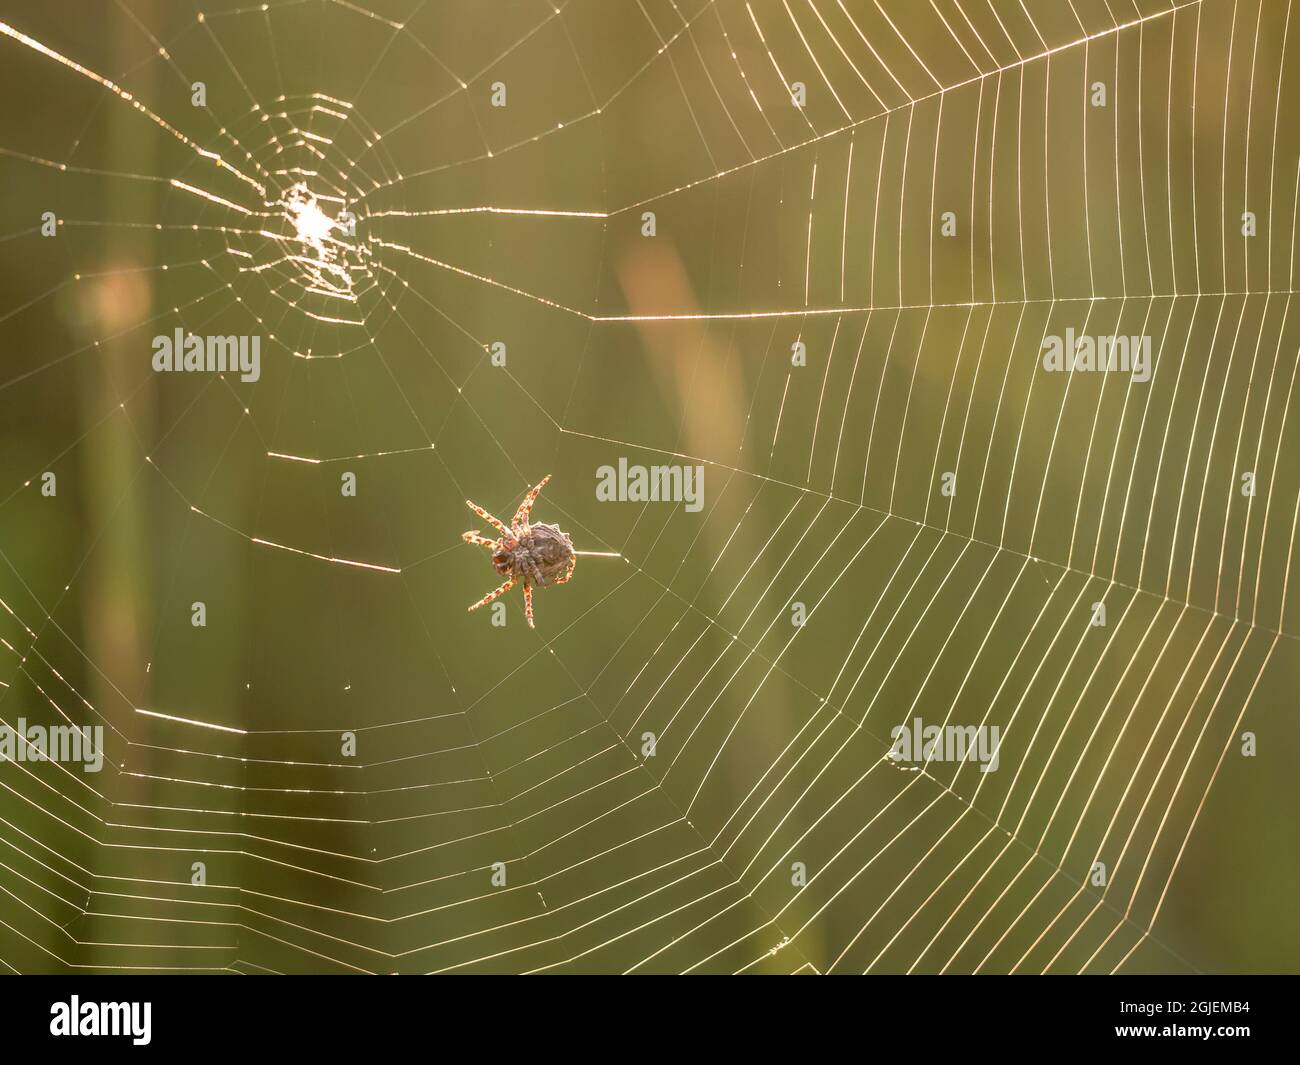 Orbweaver spider making web, prairie, Tzi-Sho Natural Area, Prairie State Park, Missouri Stock Photo